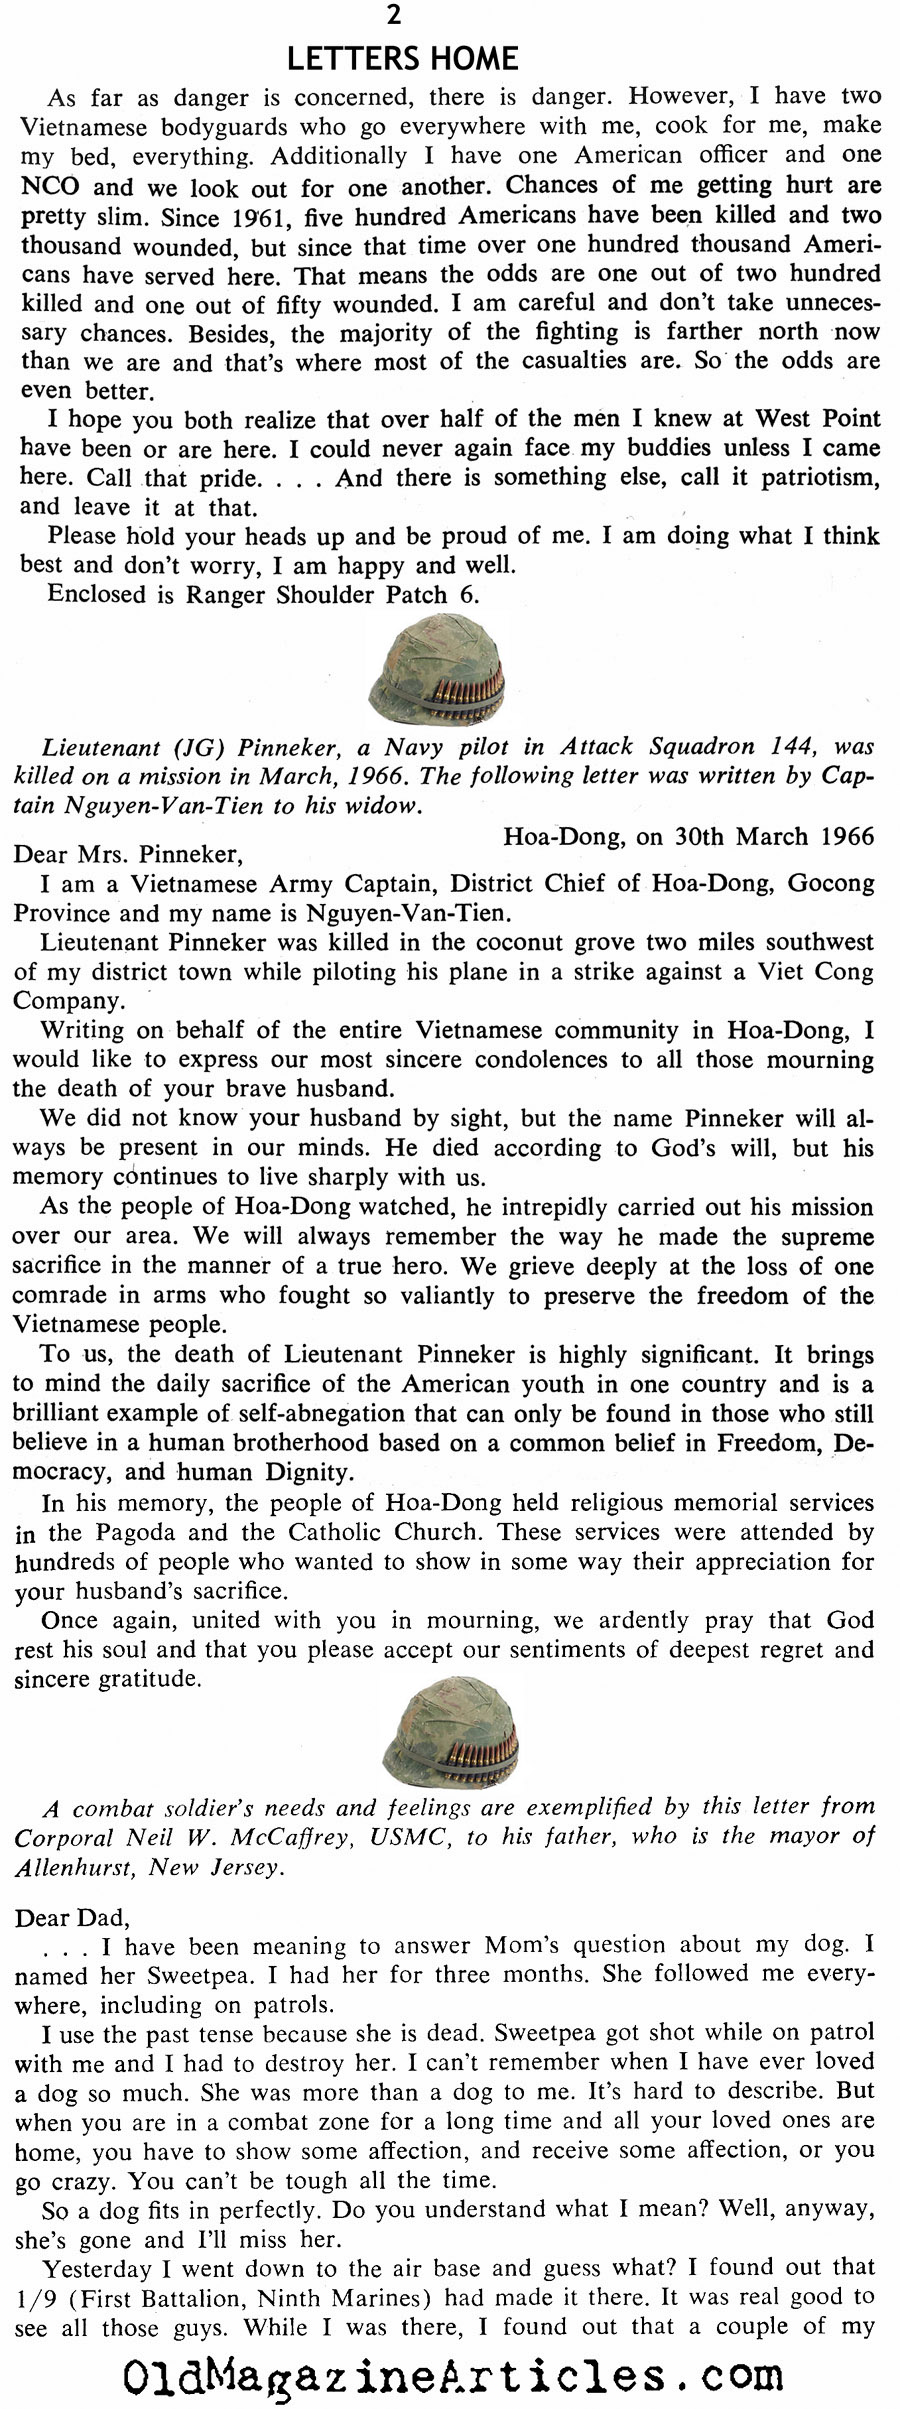 Letters from Vietnam (Coronet Magazine, 1967)